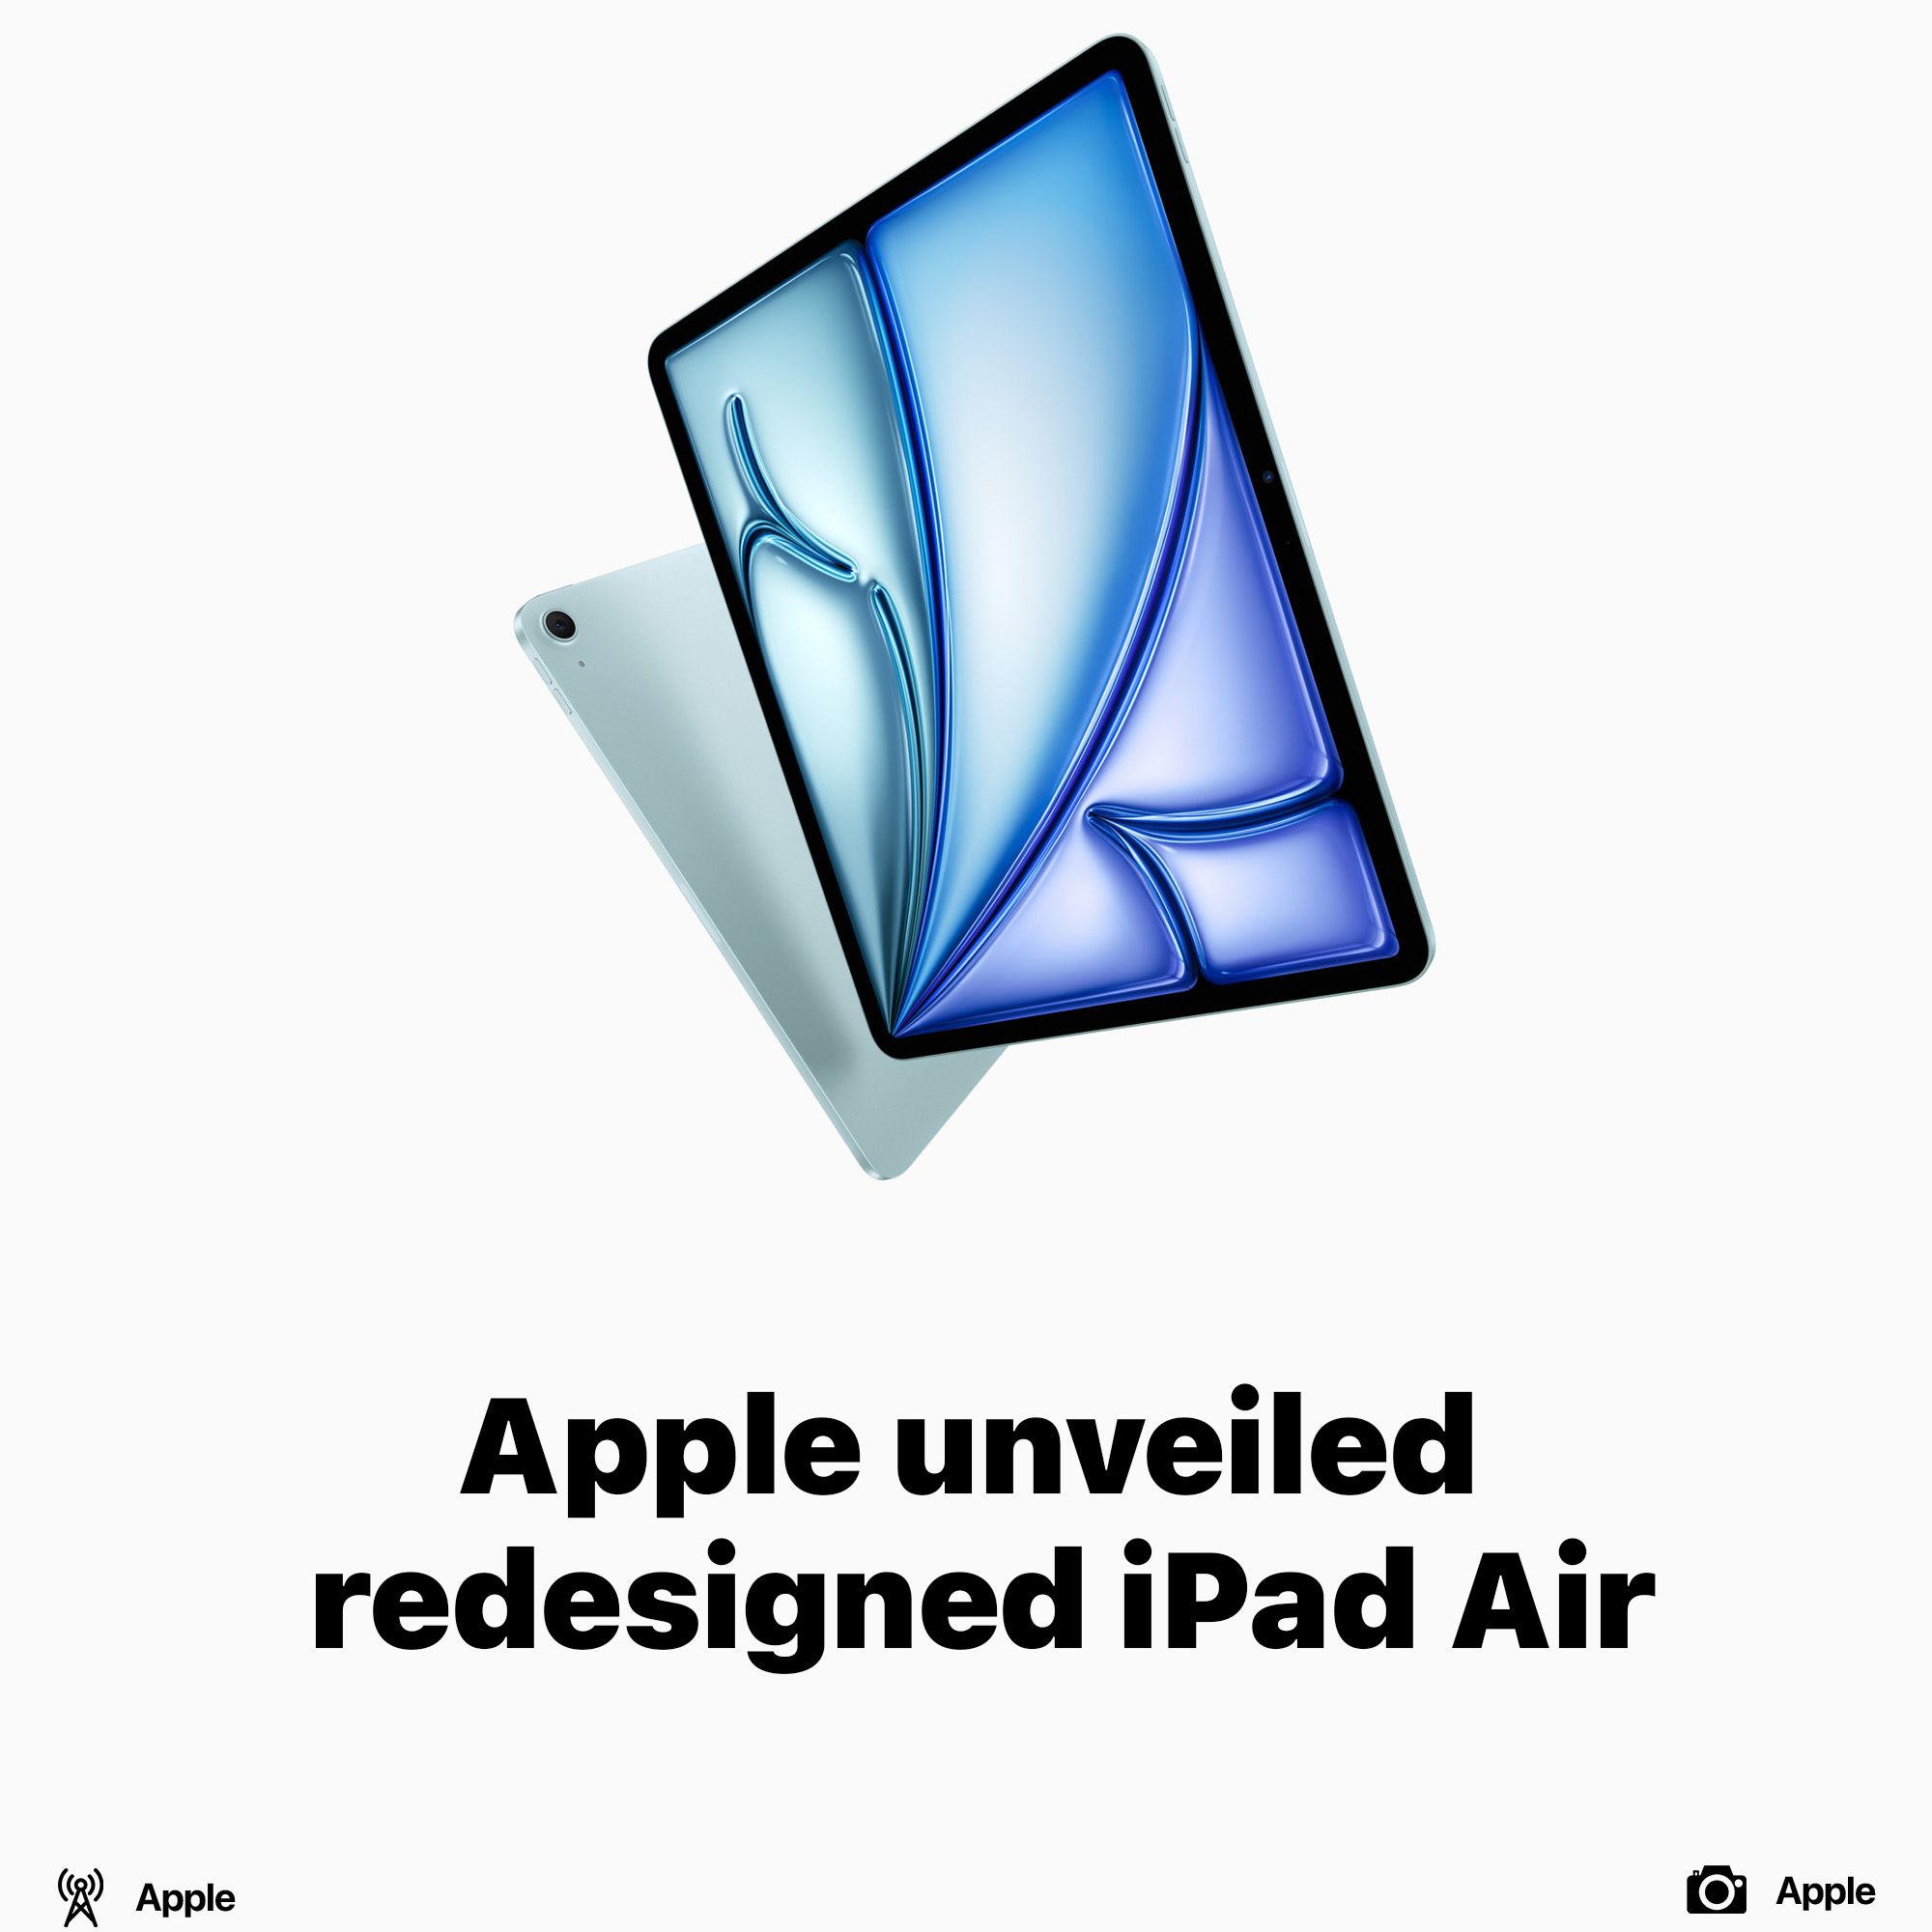 Apple unveiled redesigned iPad Air